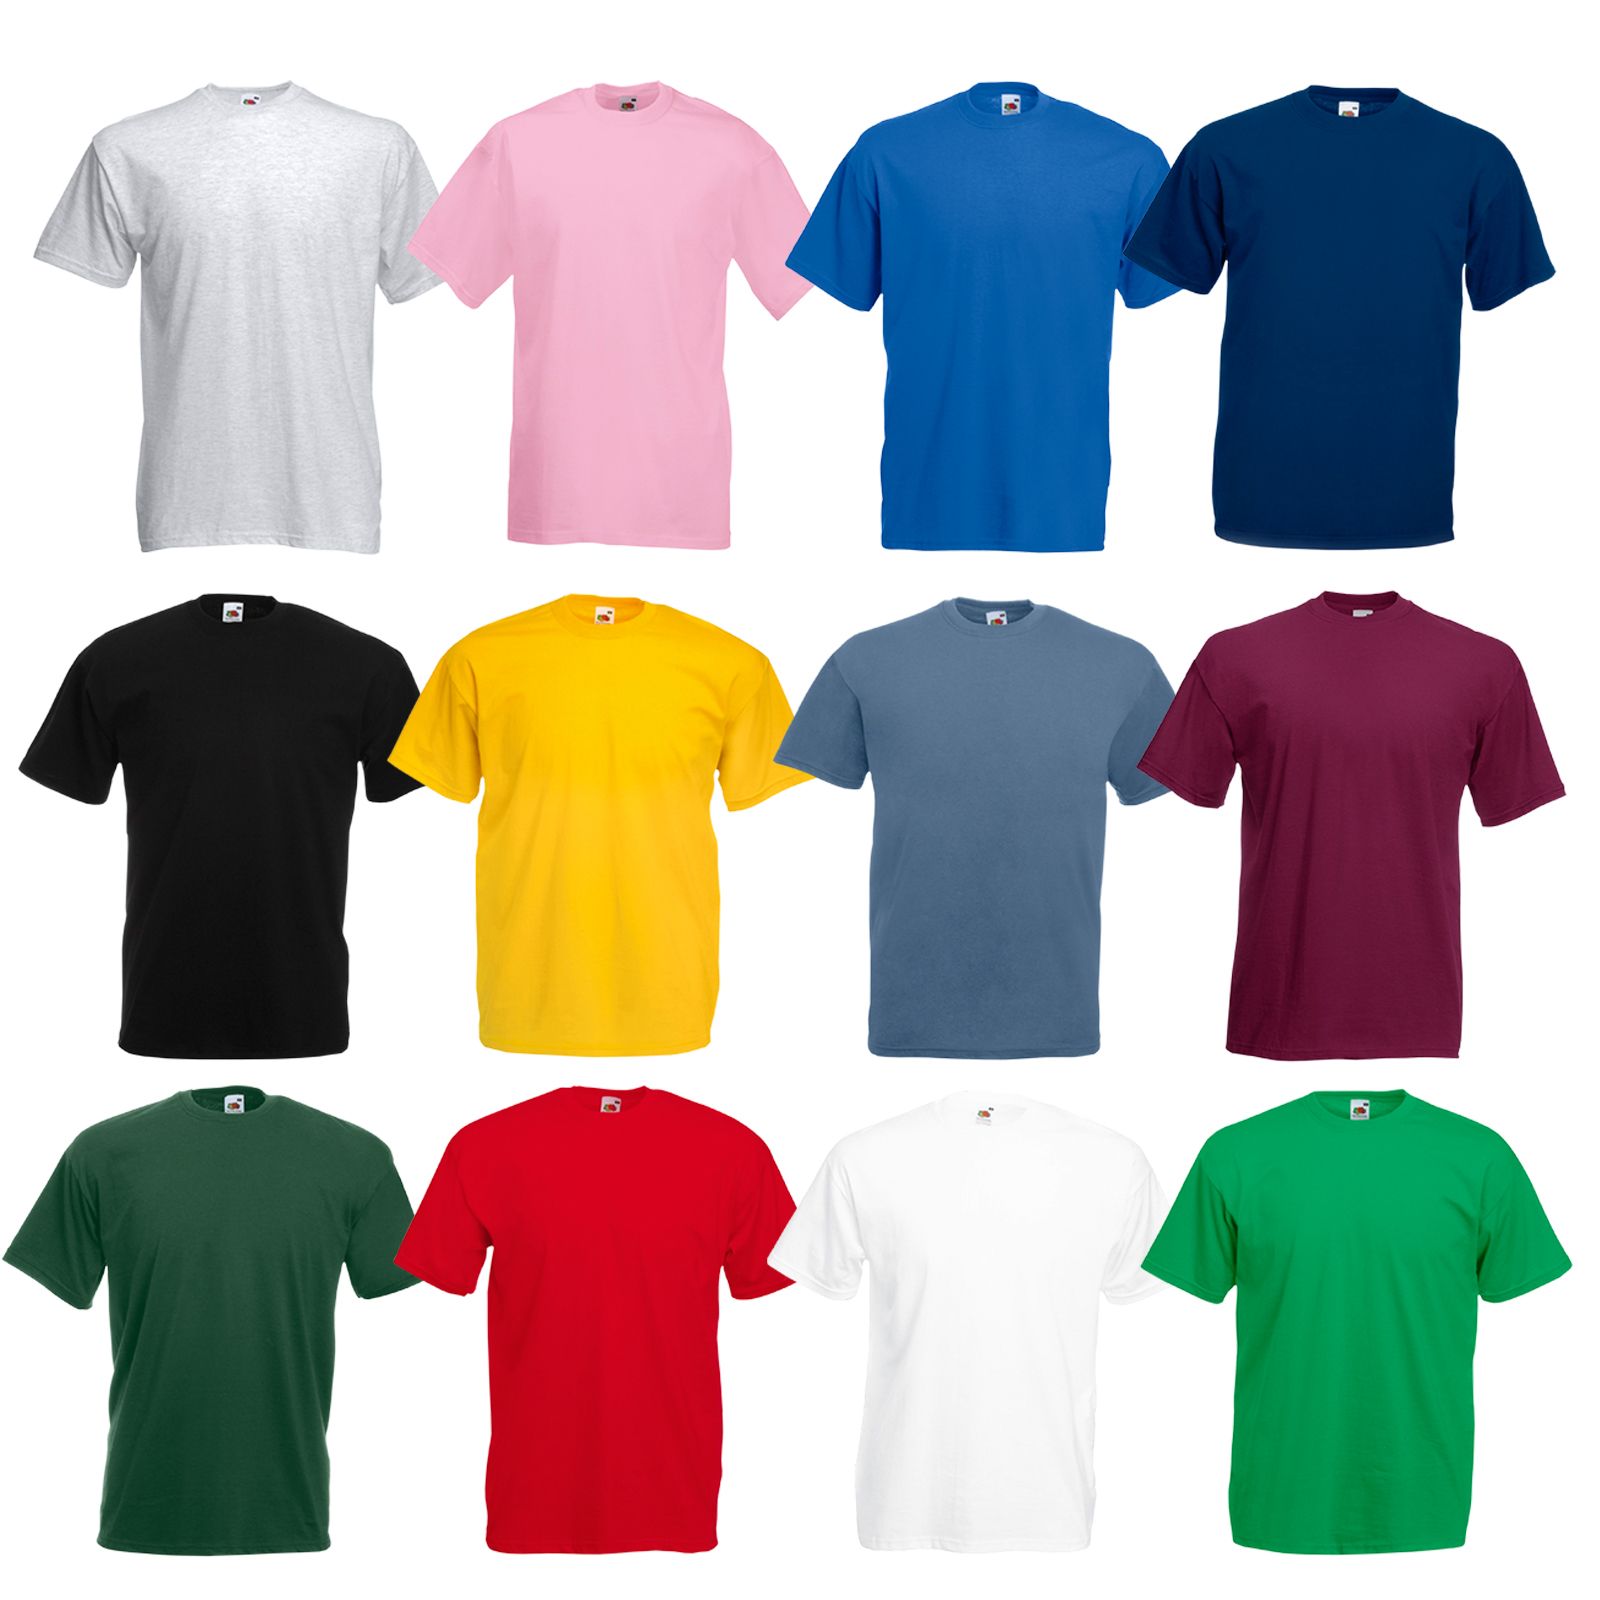 Blank T Shirts Wholesale TURKEY  Plain T-Shirts in Bulk Wholesale